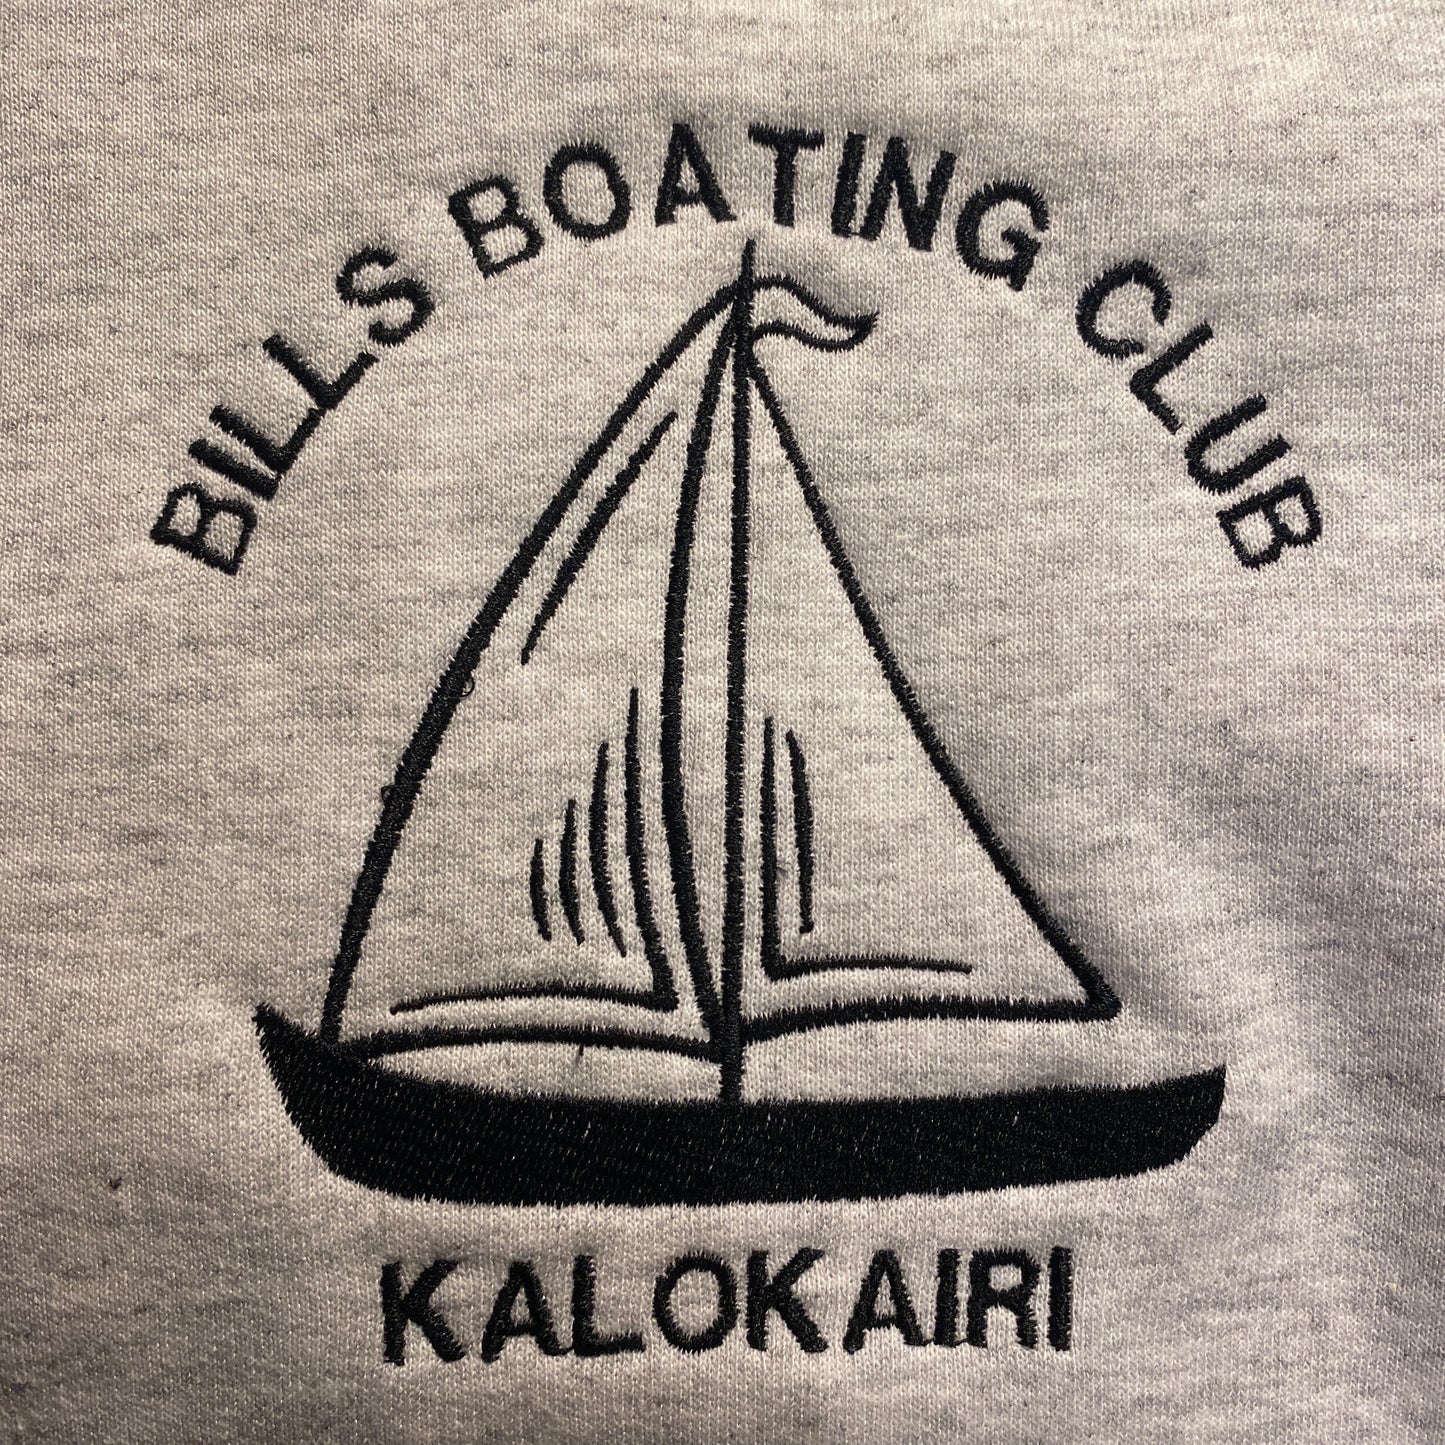 Bills Boating Club Embroidered Sweatshirt